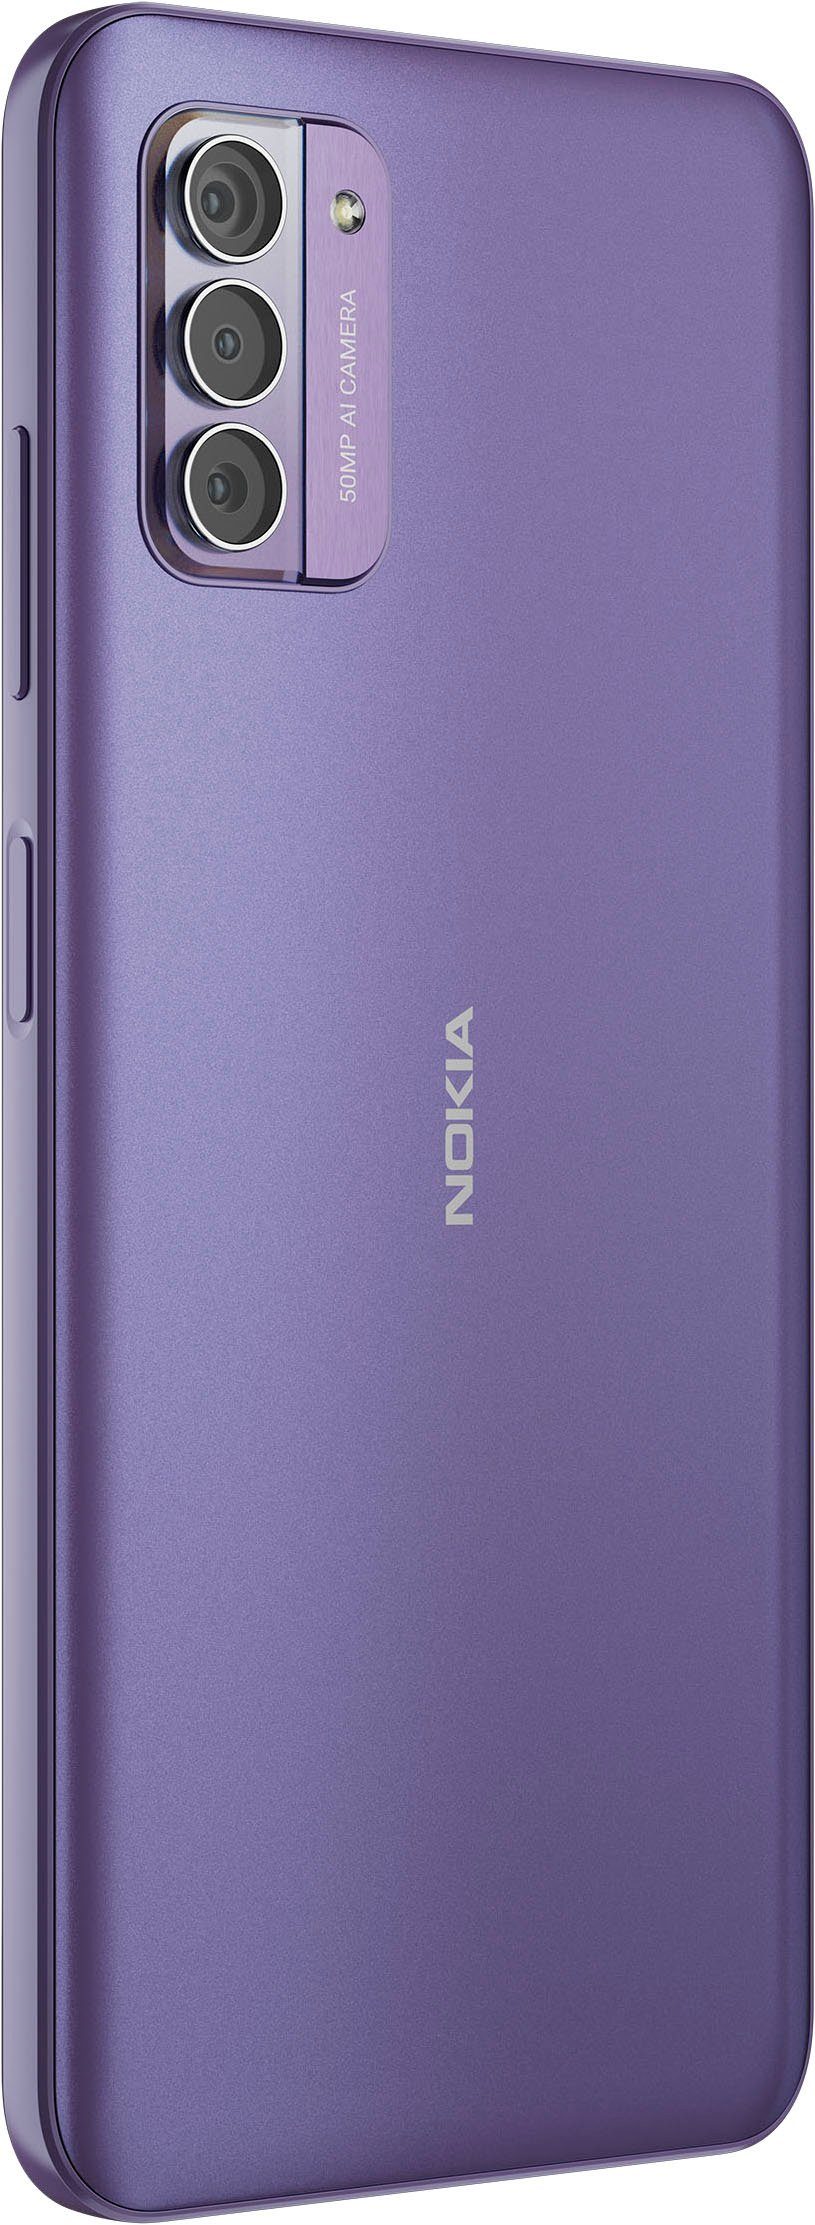 128 MP Smartphone (16,9 G42 Kamera) purple cm/6,65 Zoll, 50 Nokia Speicherplatz, GB